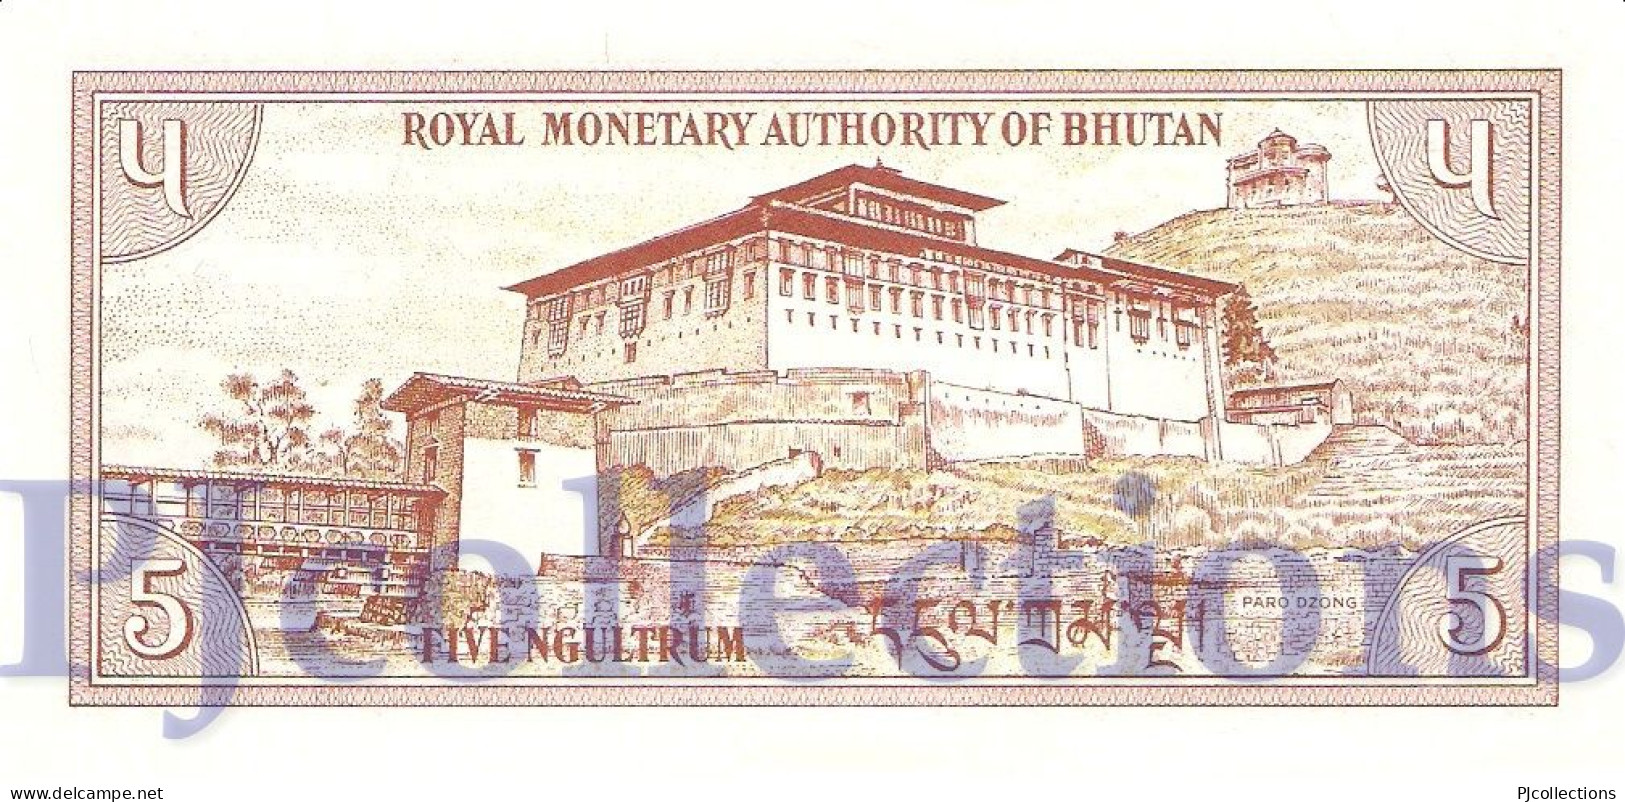 BHUTAN 5 NGULTRUM 1985 PICK 14b UNC - Bhután